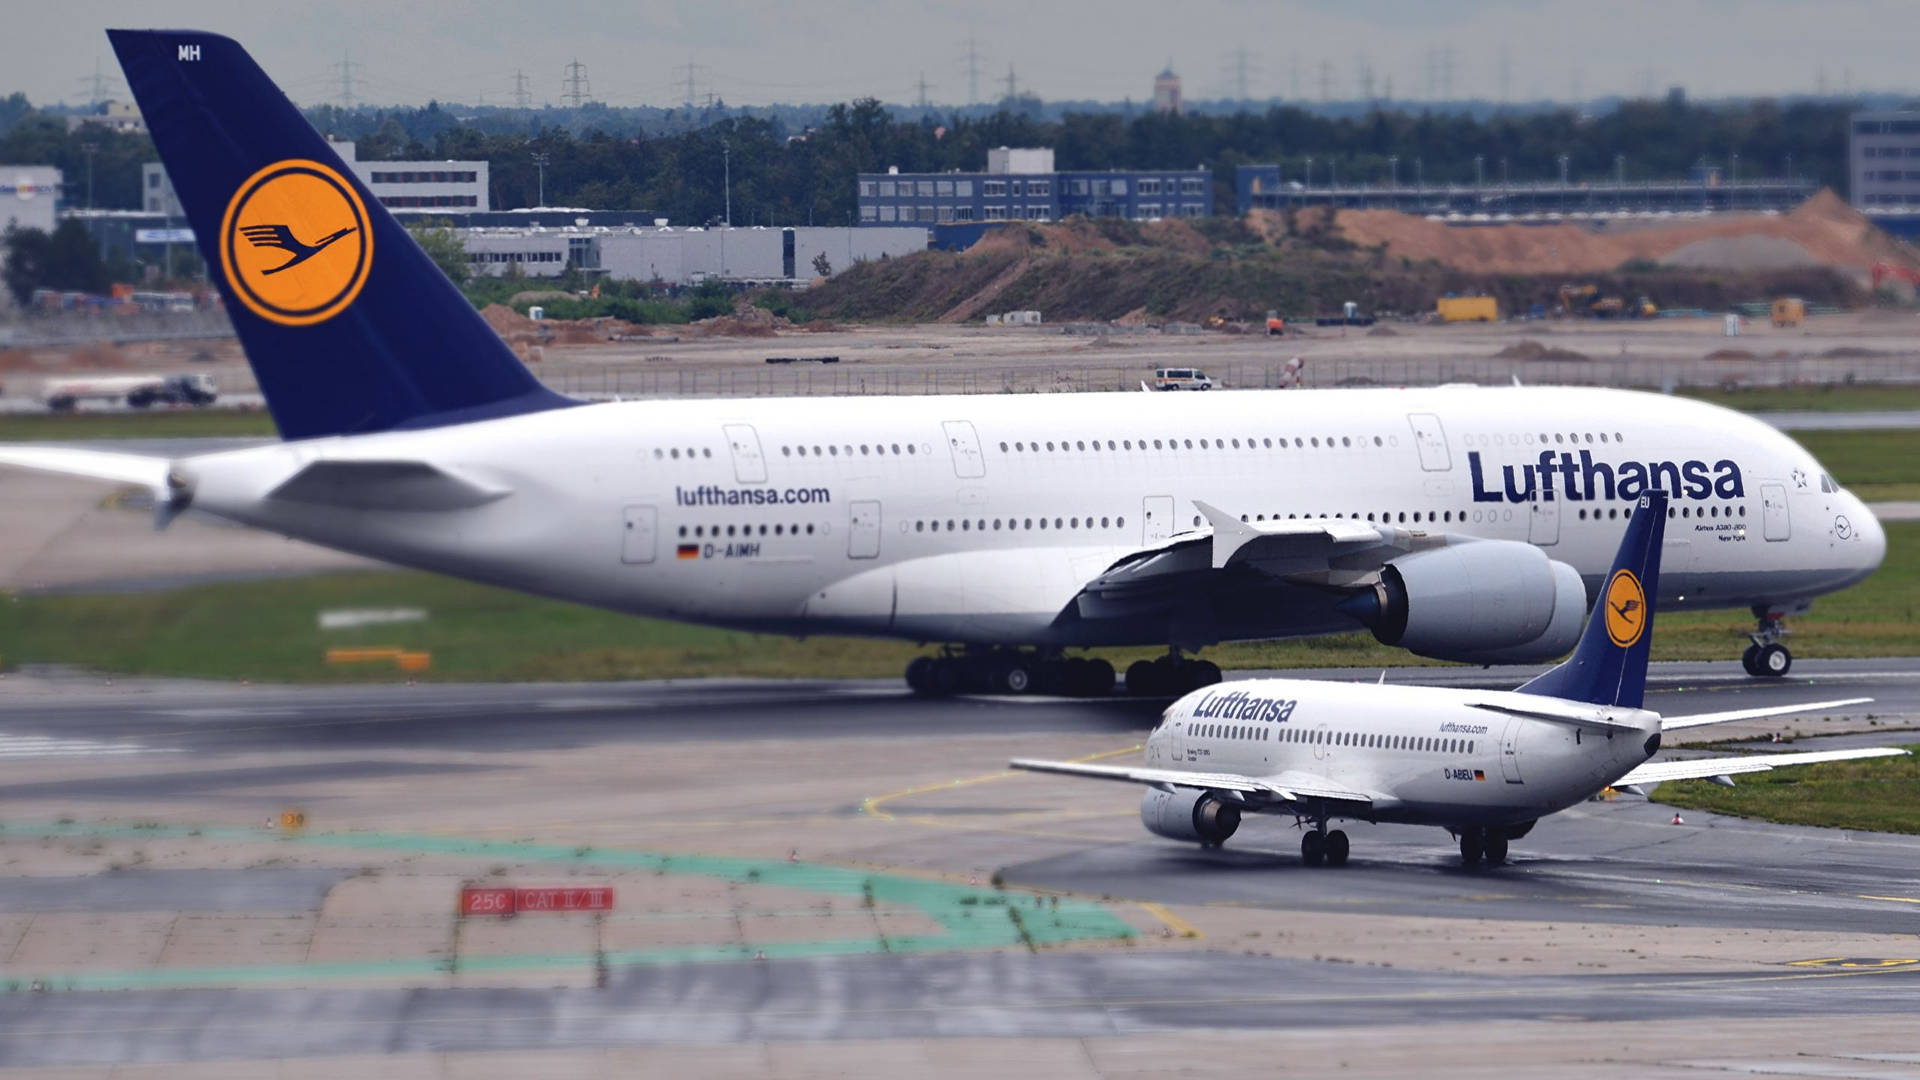 Giant And Mini Deutsche Lufthansa Airplanes Picture